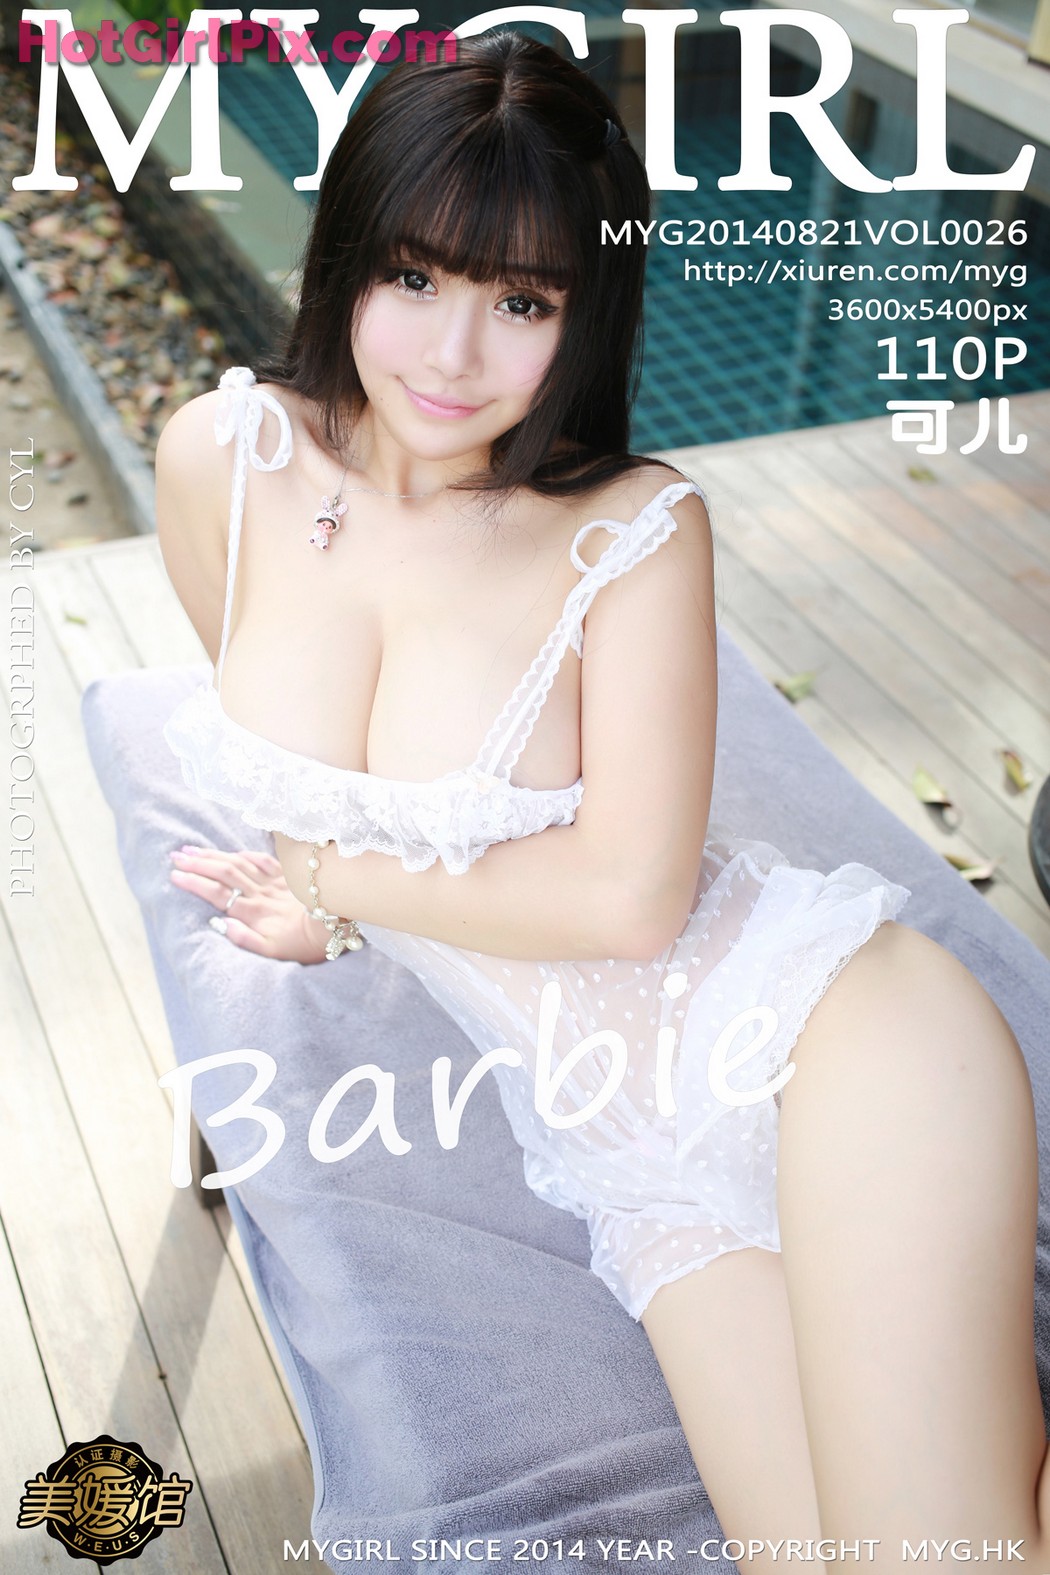 [MyGirl] Vol.026 Barbie可儿 Ke Er Cover Photo